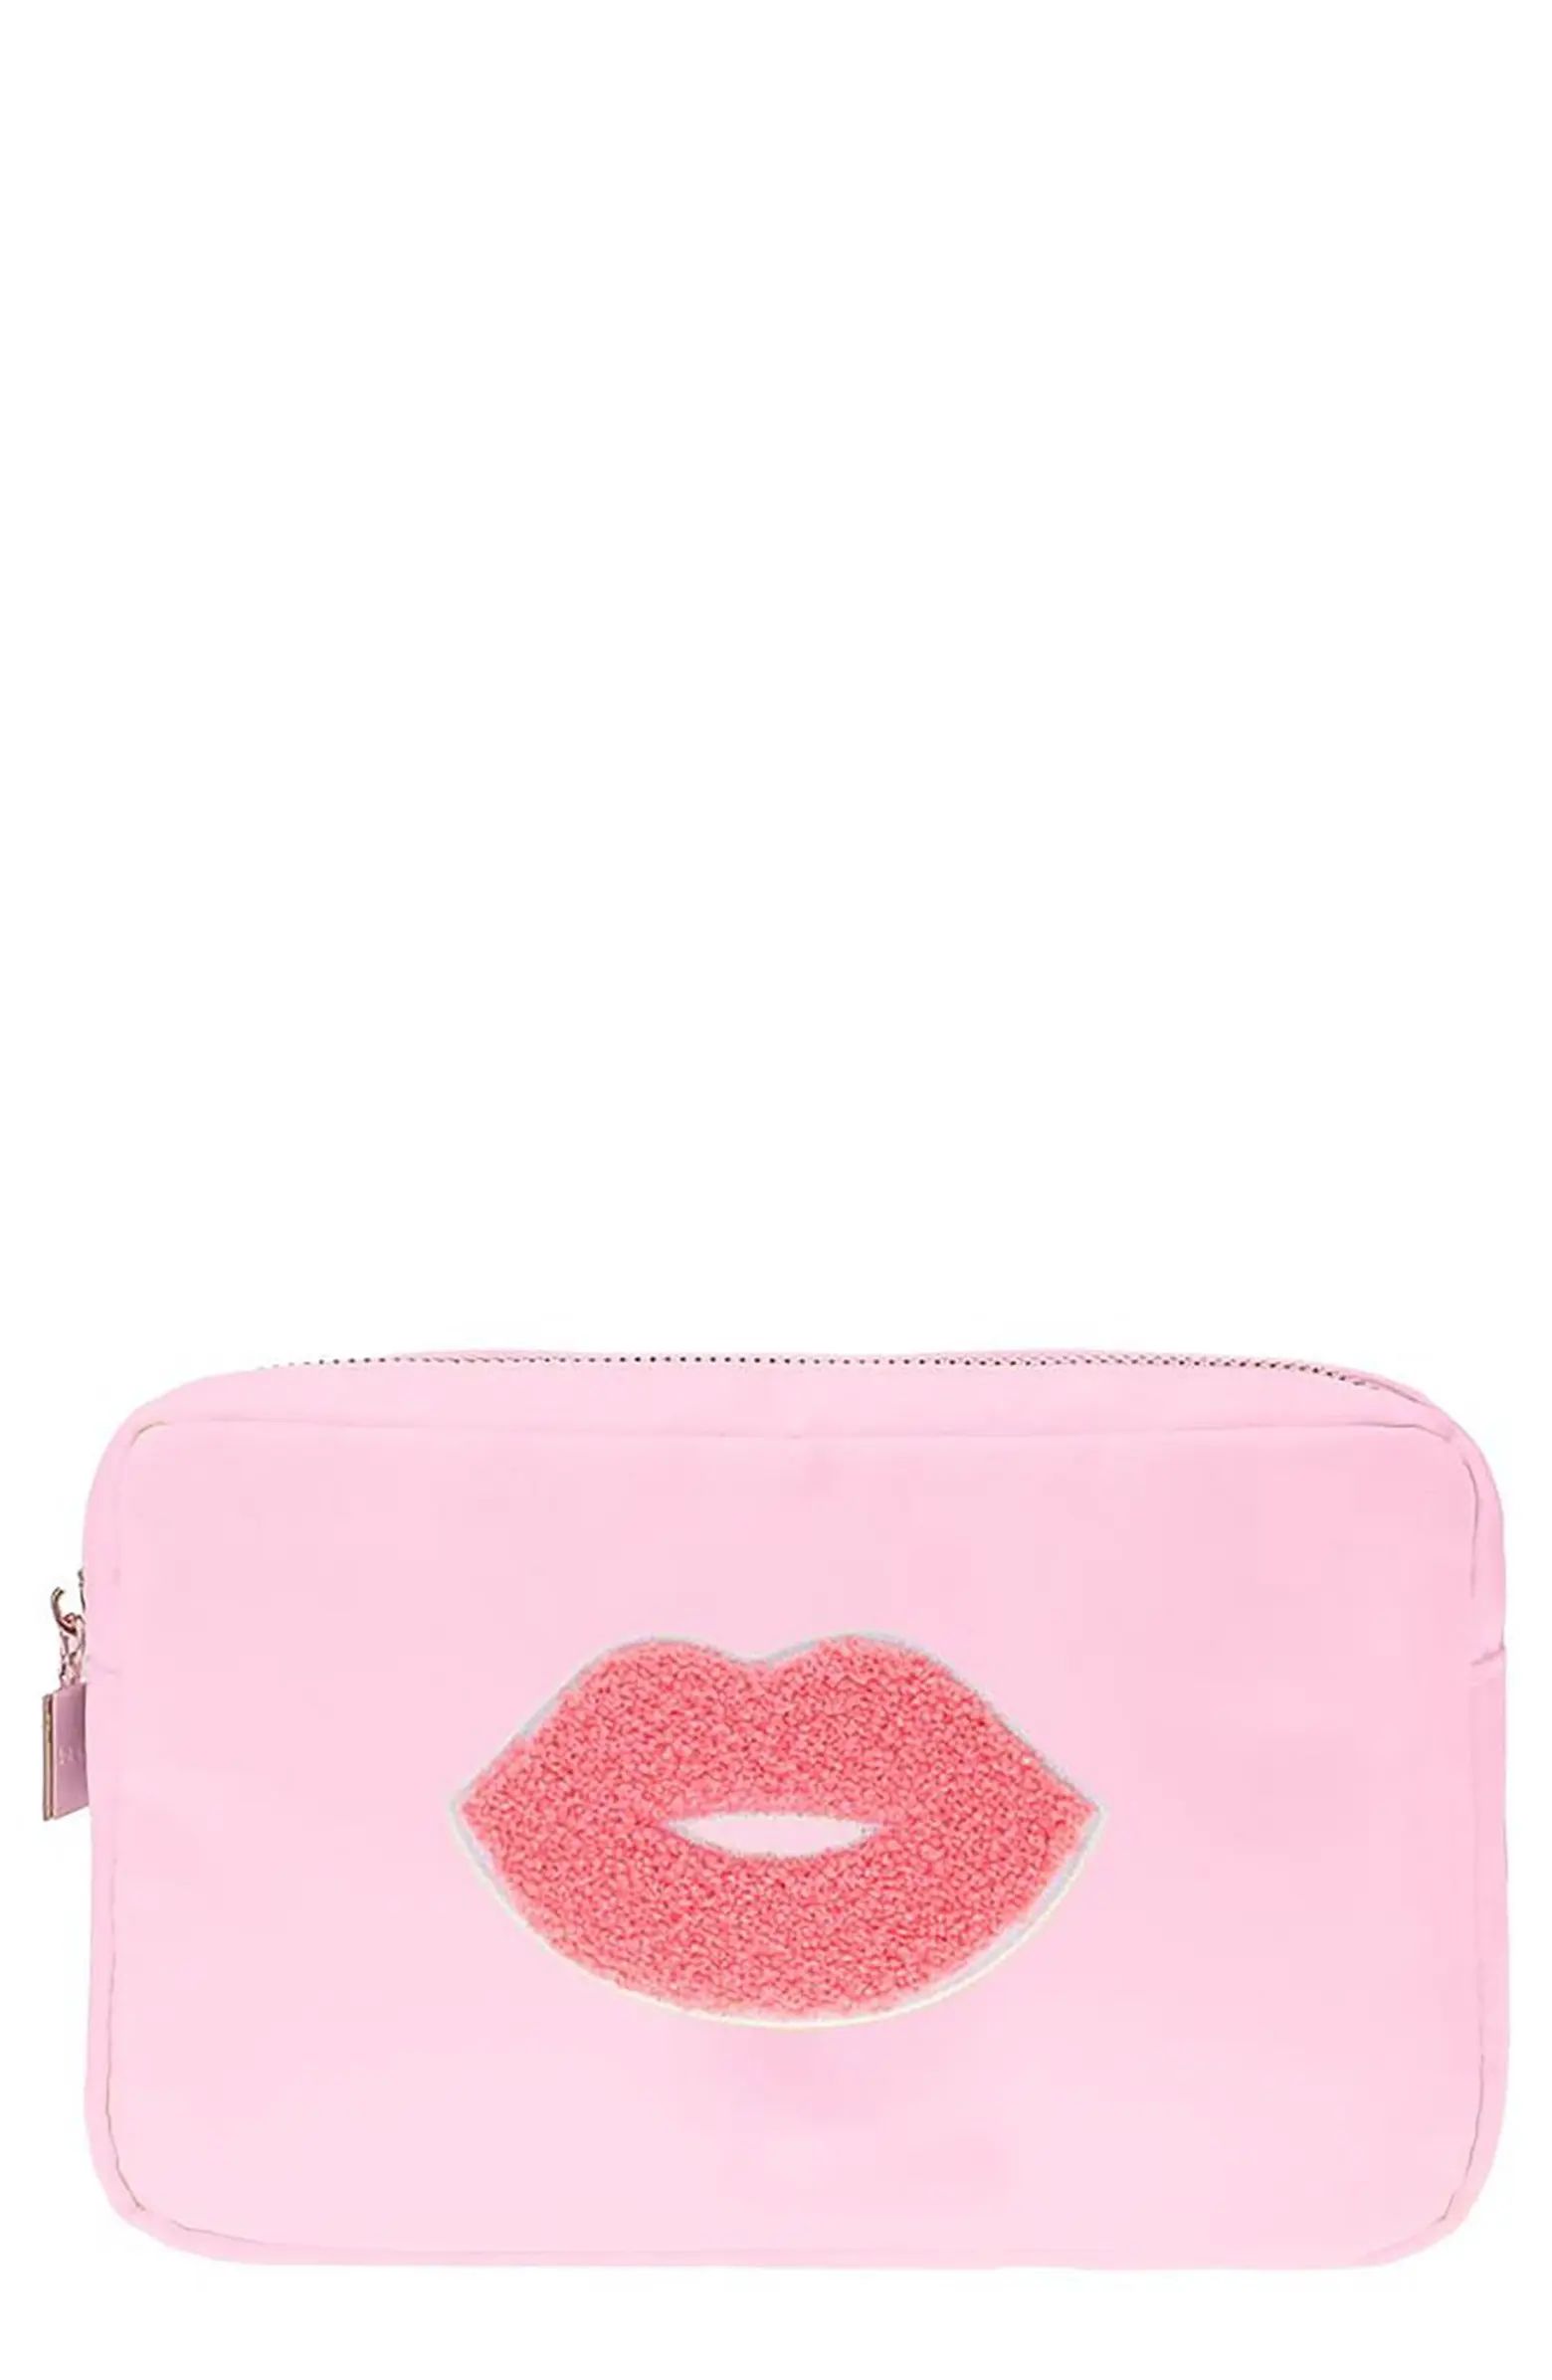 Medium Kiss Cosmetic Bag | Nordstrom